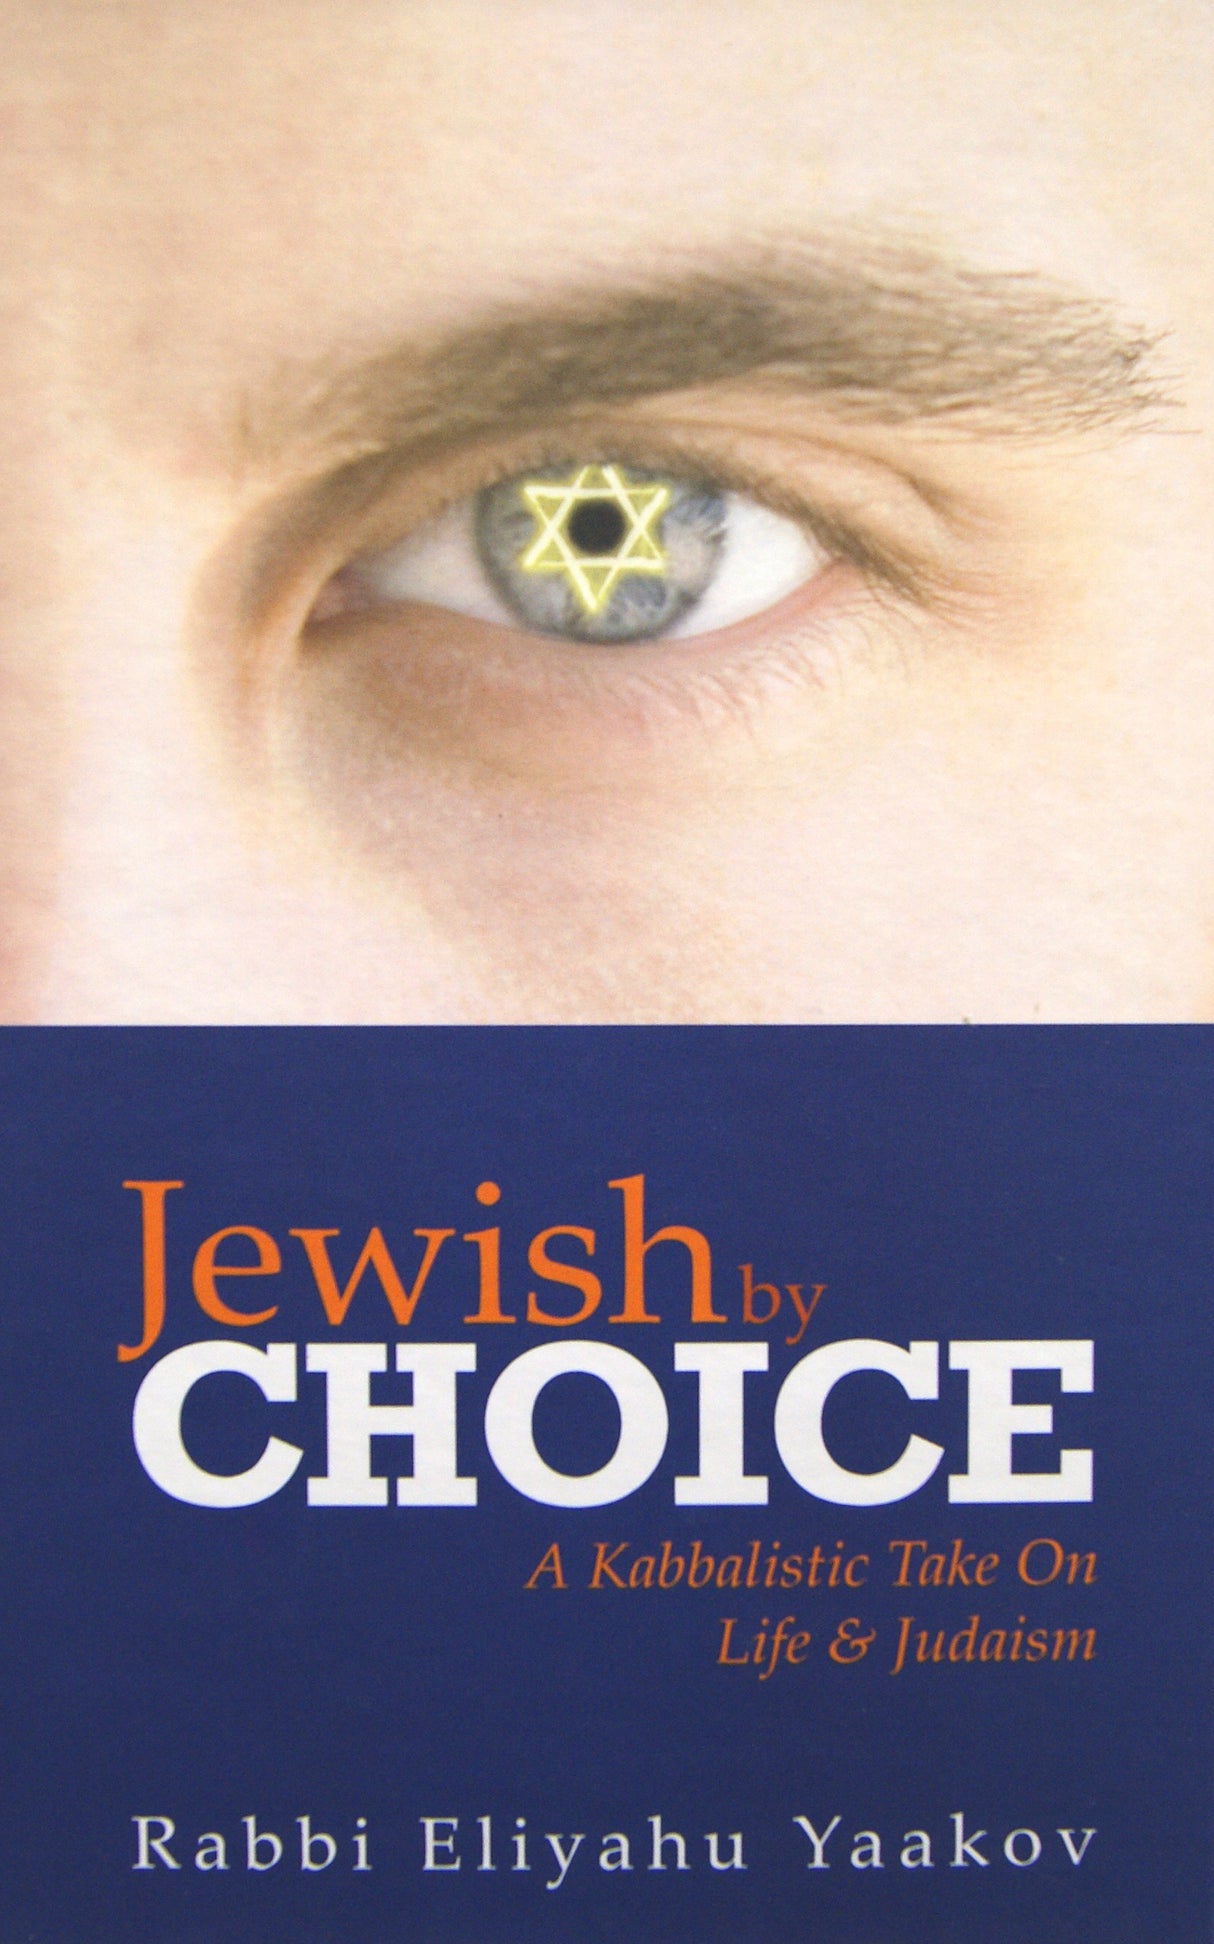 Jewish by Choice